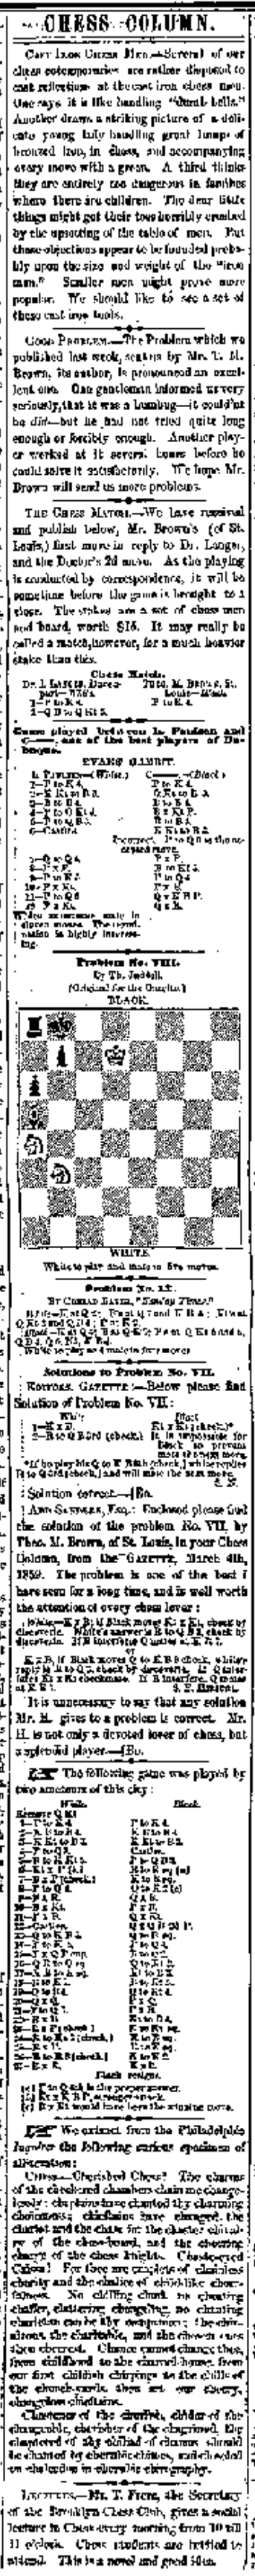 1859.03.11-01 Davenport Daily Gazette.png